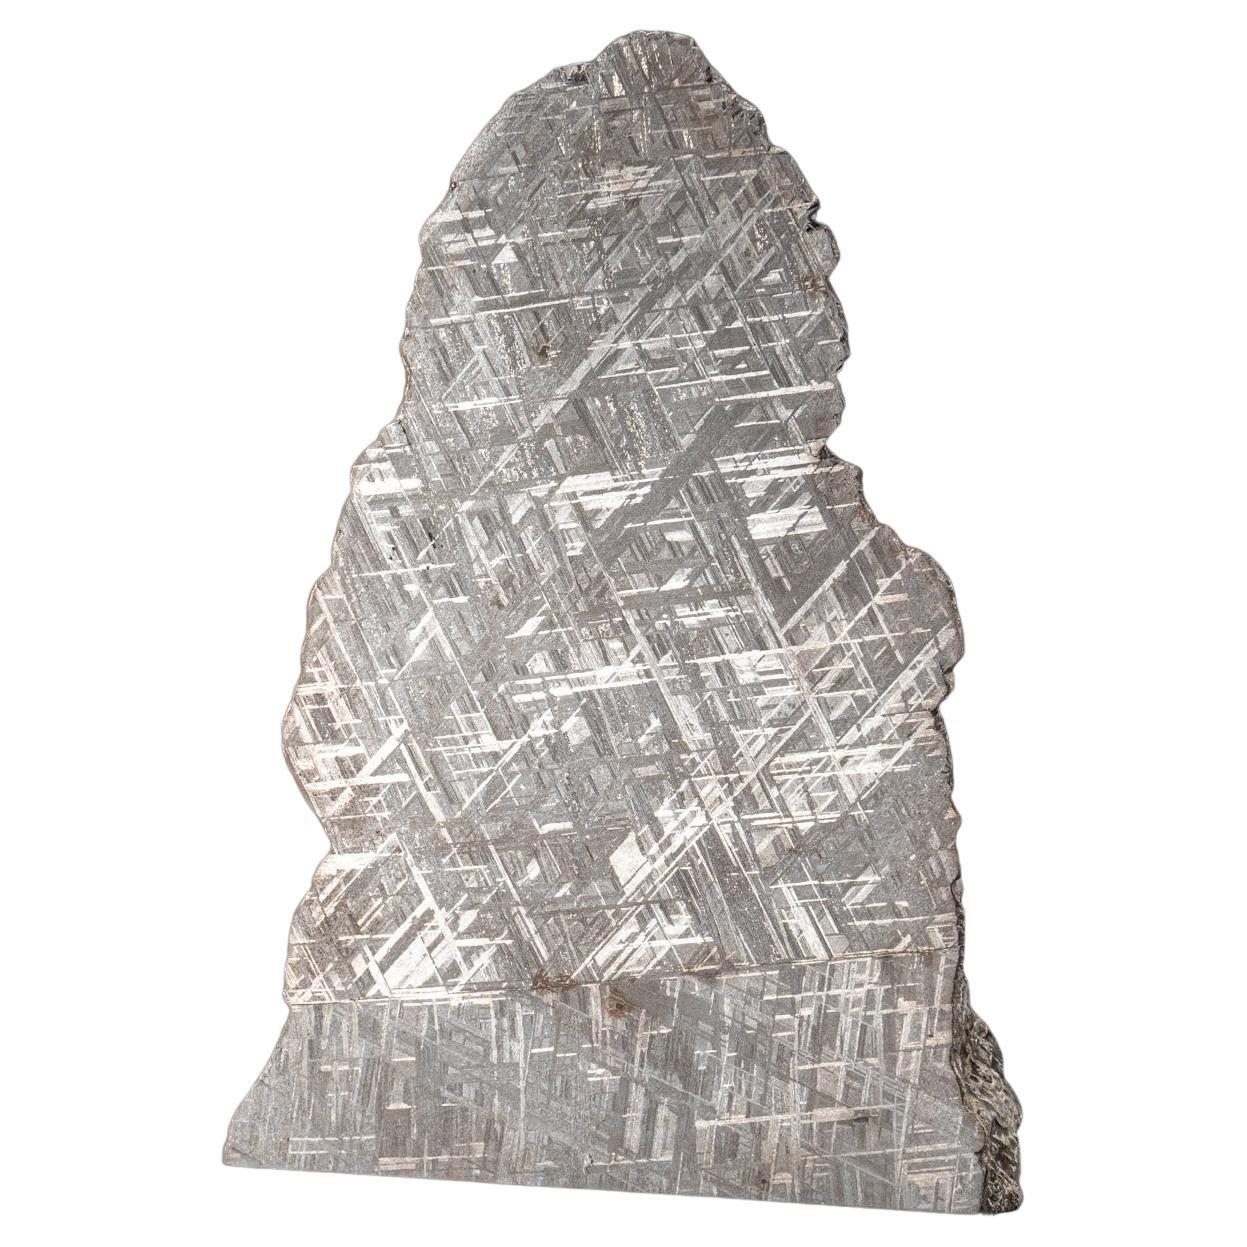 Genuine Large Muonionalusta Meteorite Slice (12 lbs) For Sale